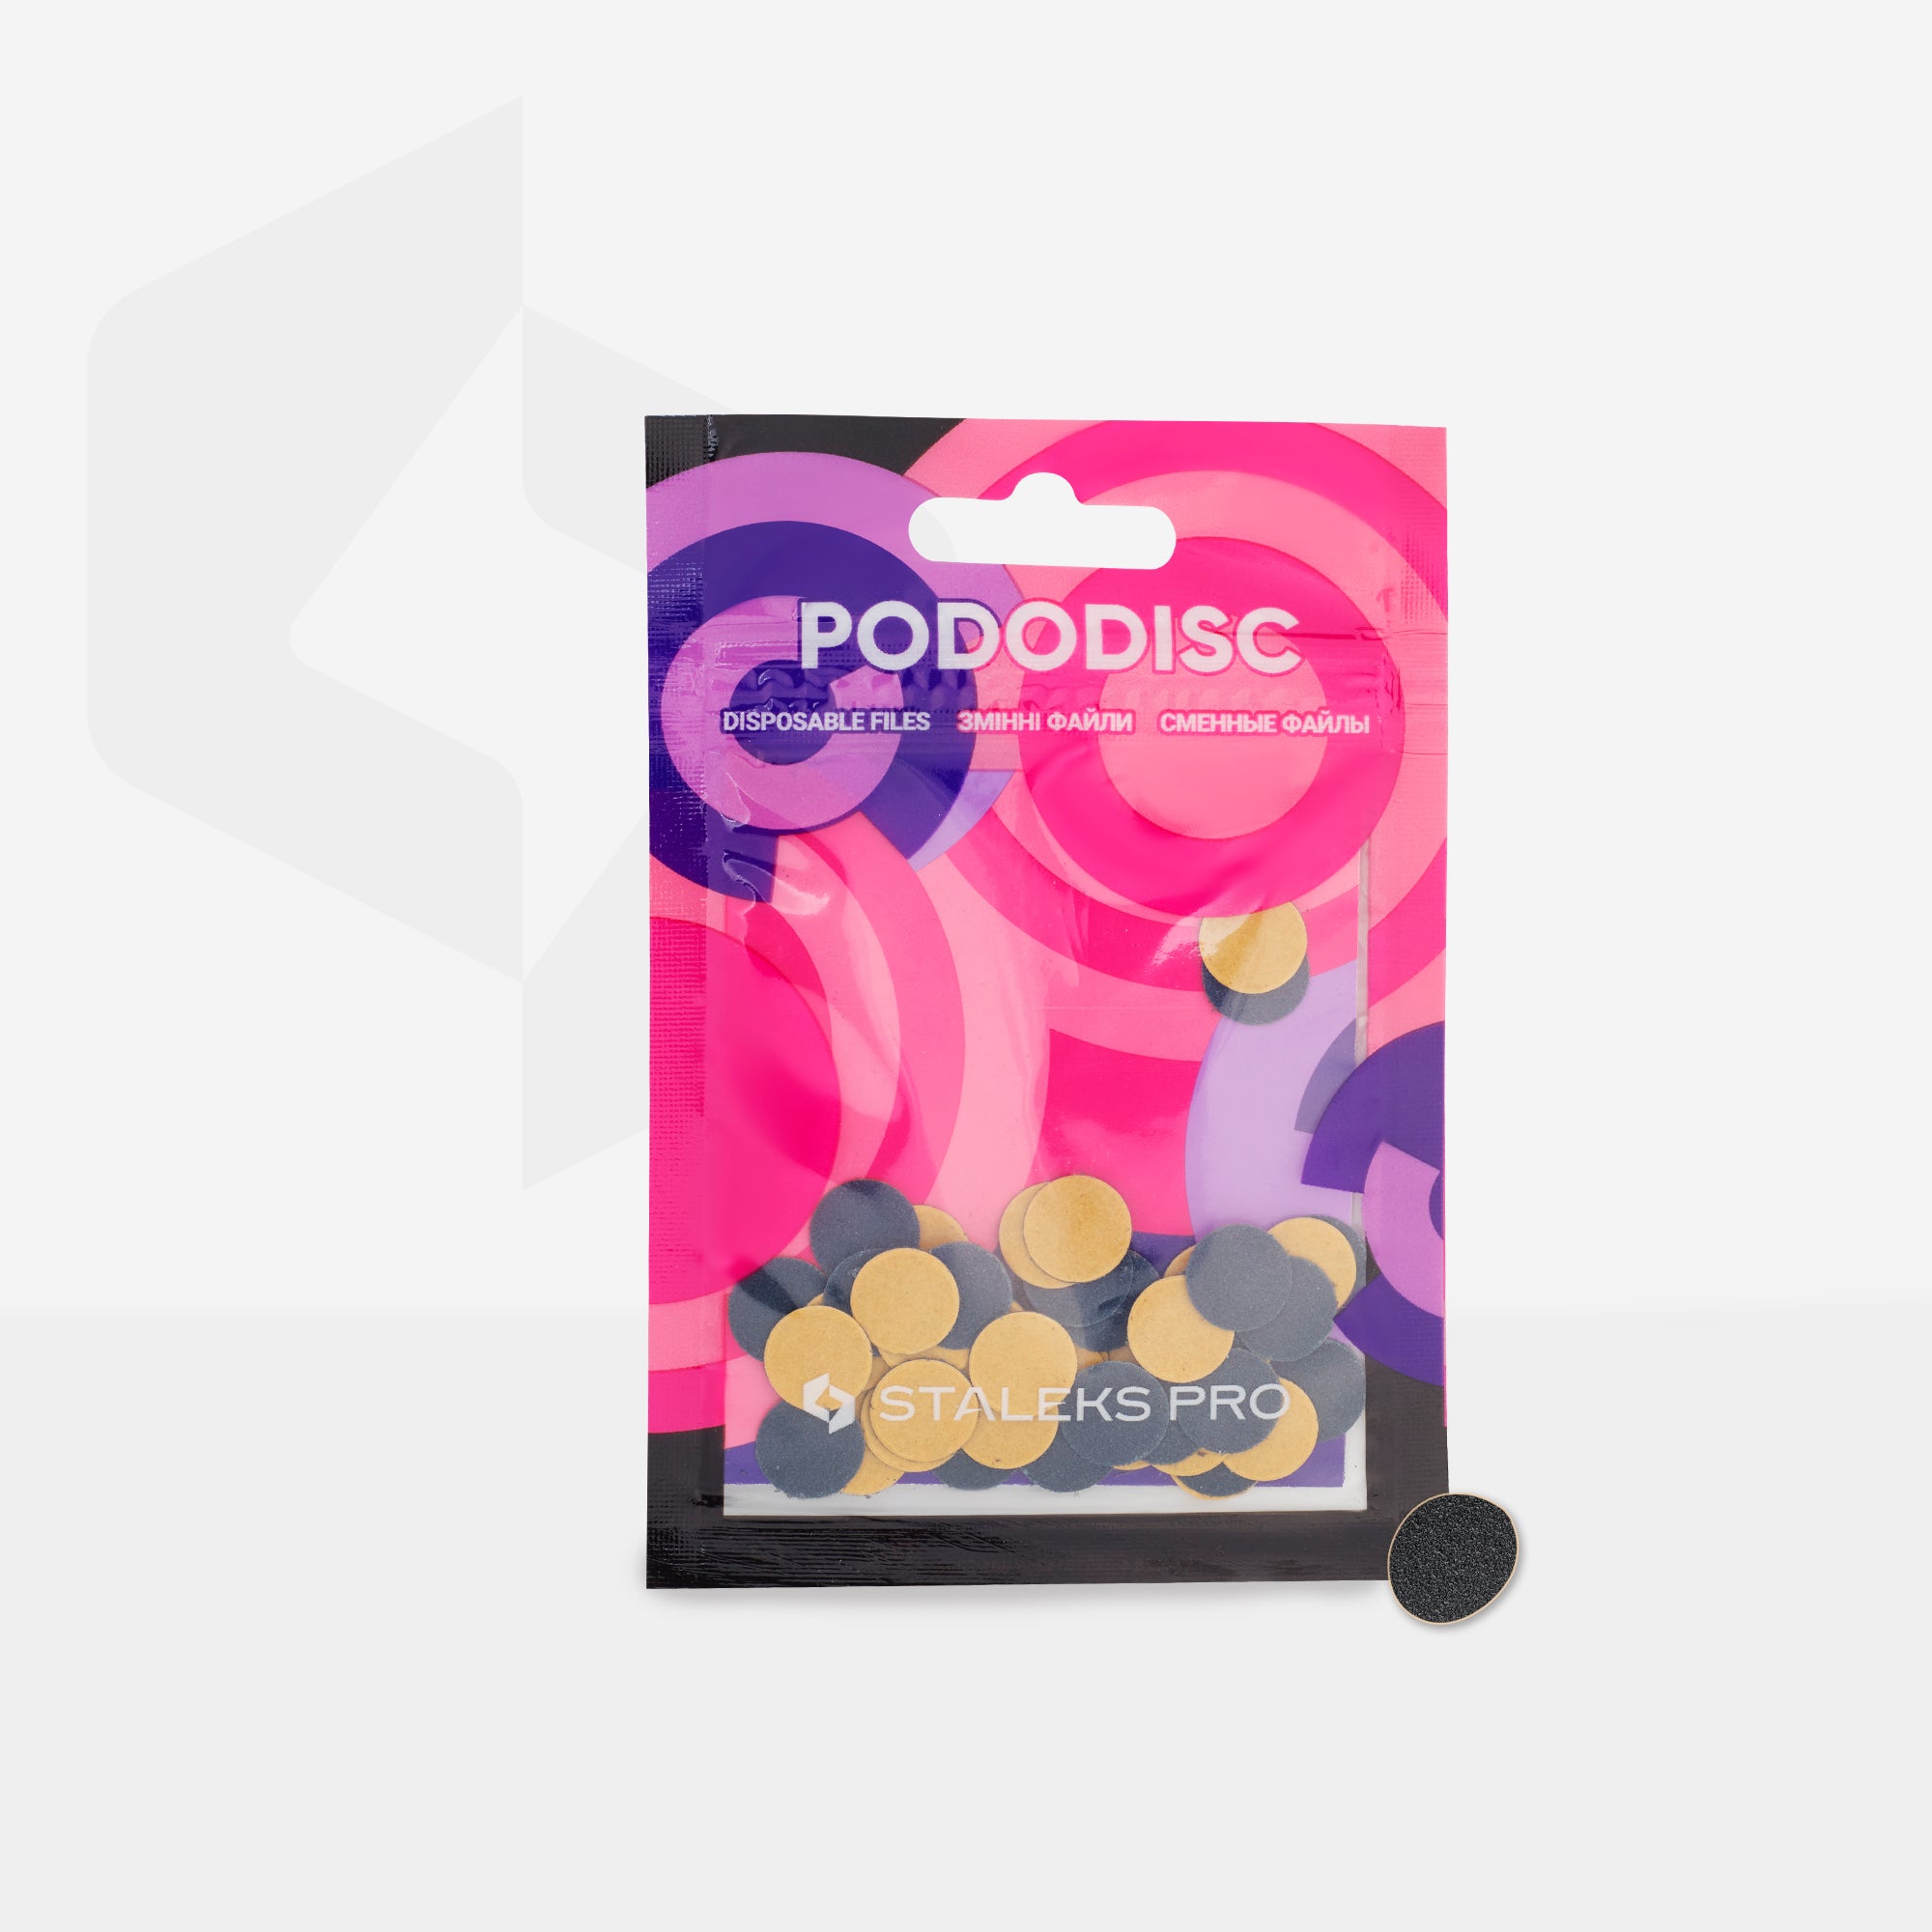 Almofadas de recarga para disco de pedicura PODODISC STALEKS PRO XS (50 peças)